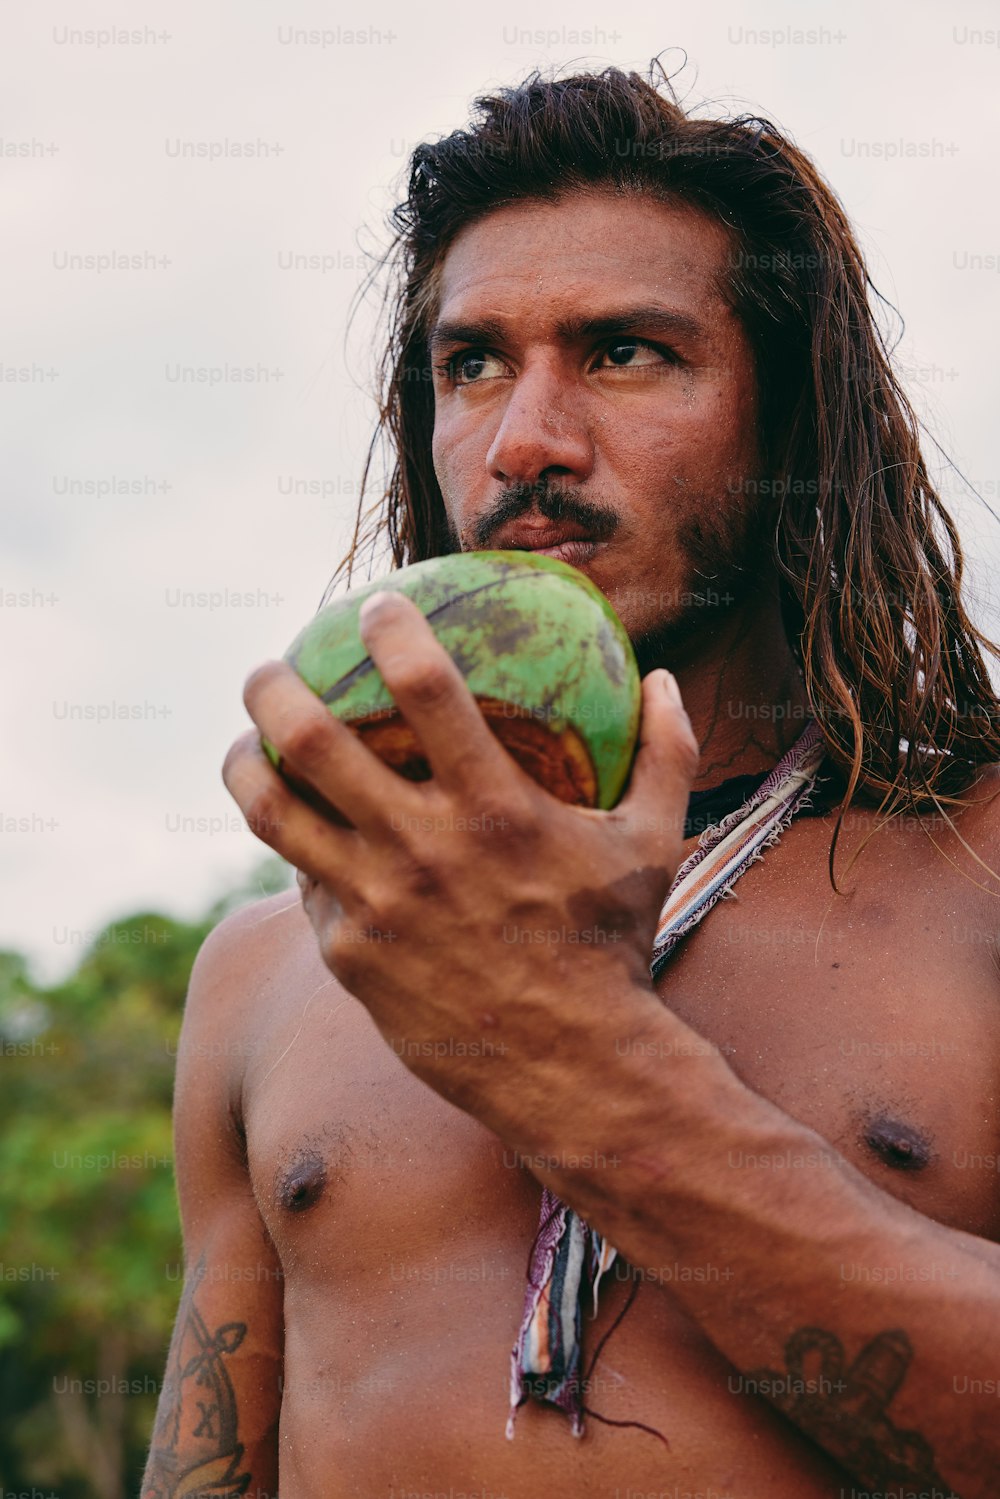 Un hombre con cabello largo sosteniendo un coco